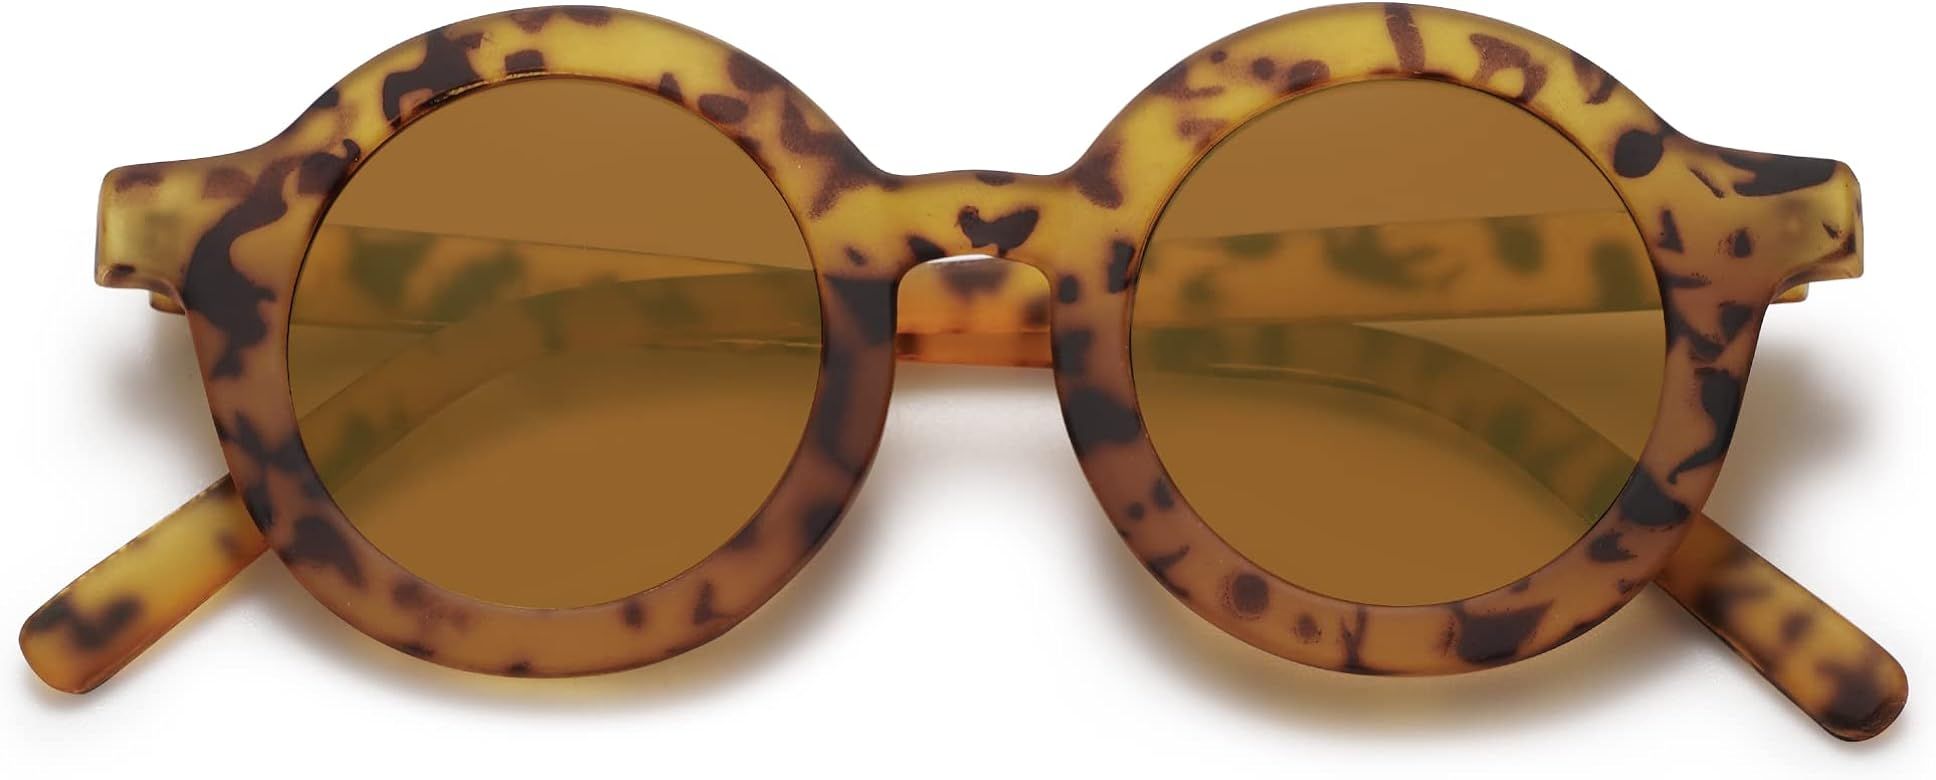 SOJOS Cute Round Polarized Sunglasses for Kids Girls Boys UV400 Protection De Sol Gafas Beach Holida | Amazon (US)